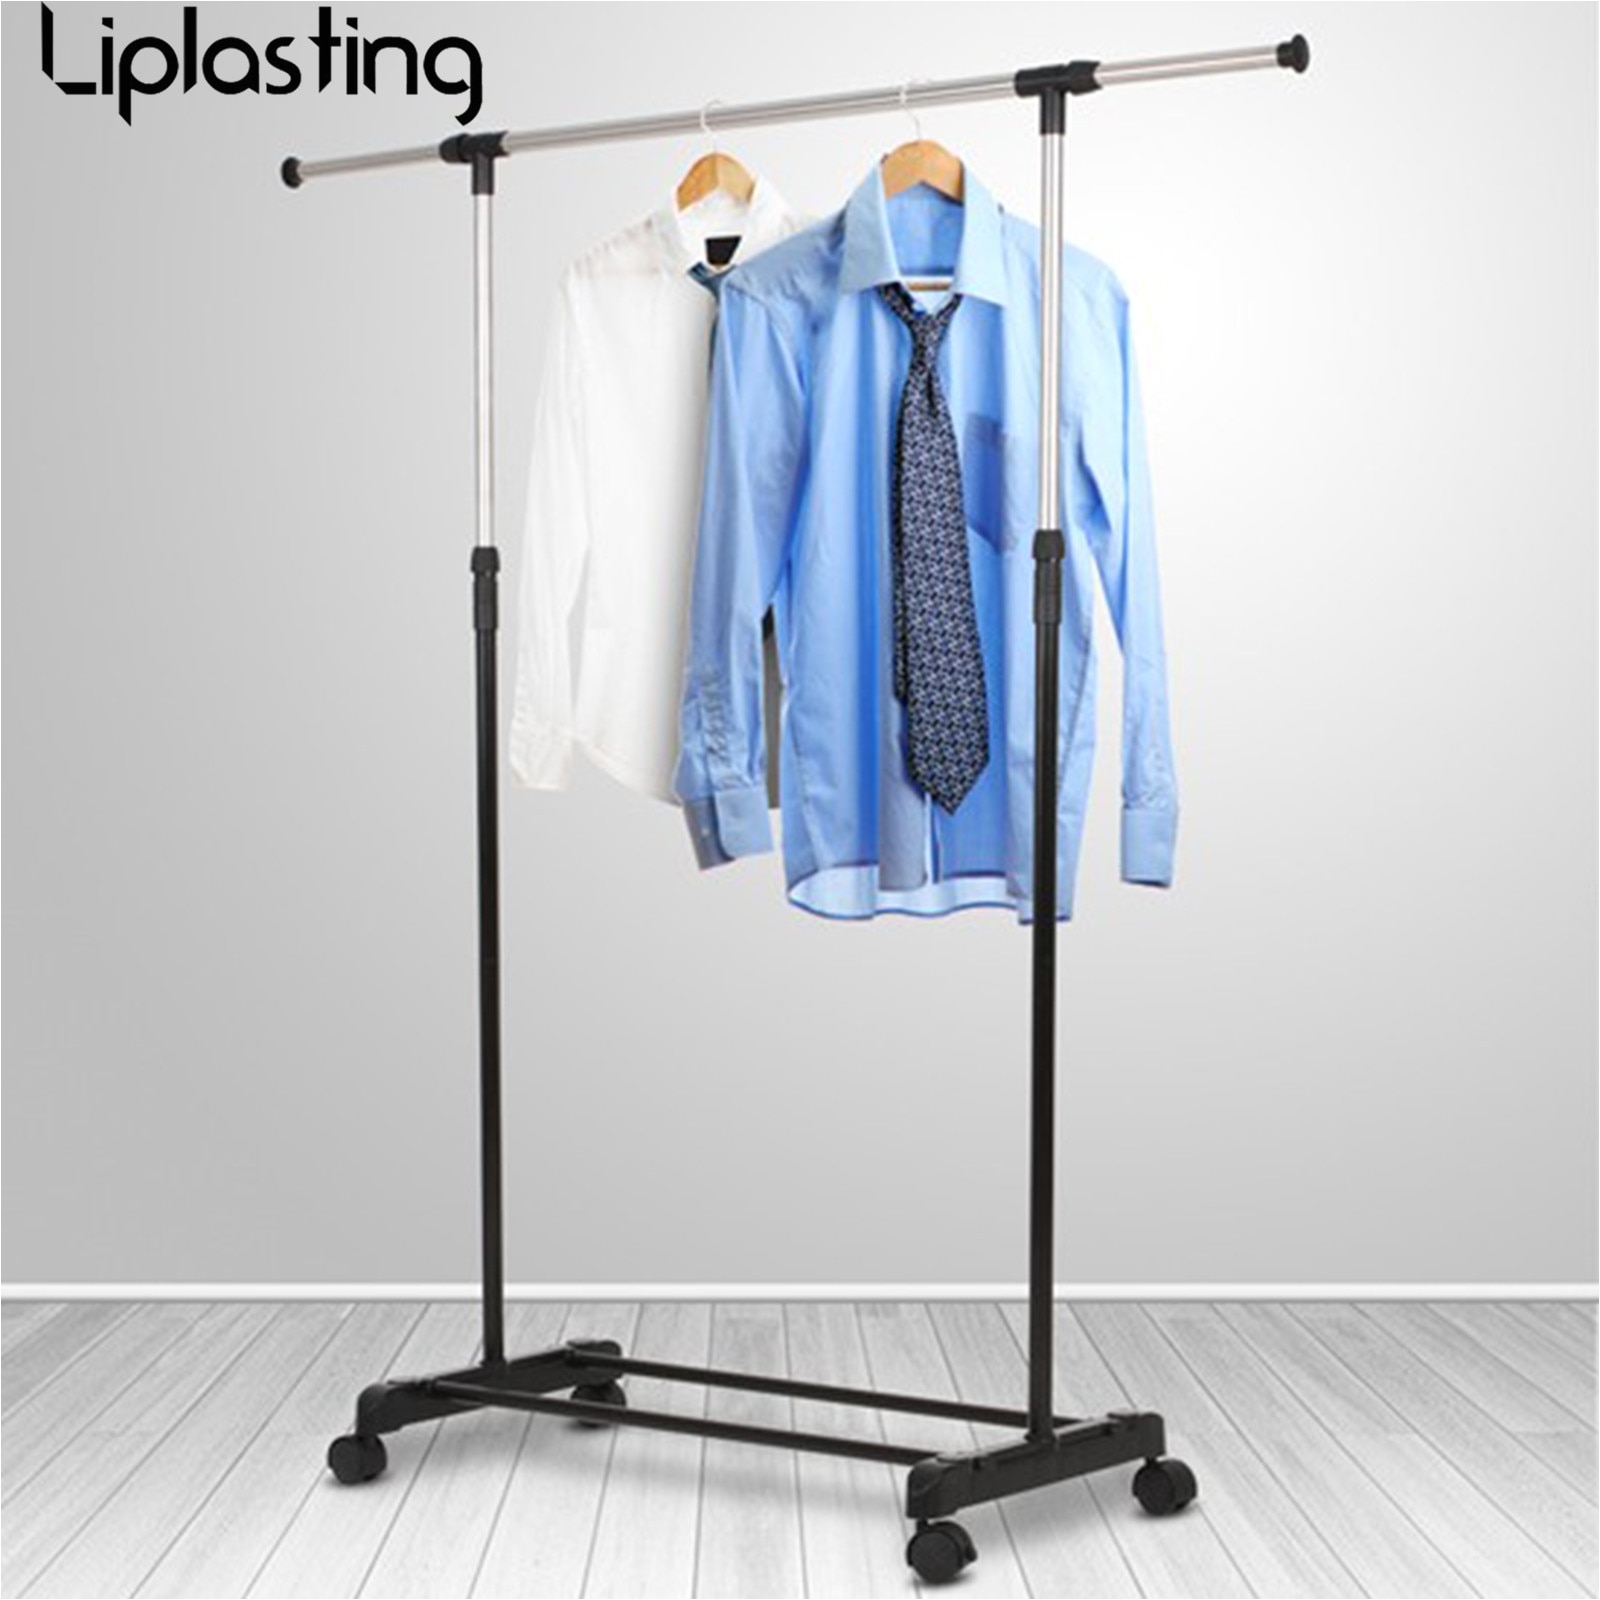 liplasting high quality adjustable single garment rack portable clothes hanger organizer heavy duty rail with wheel